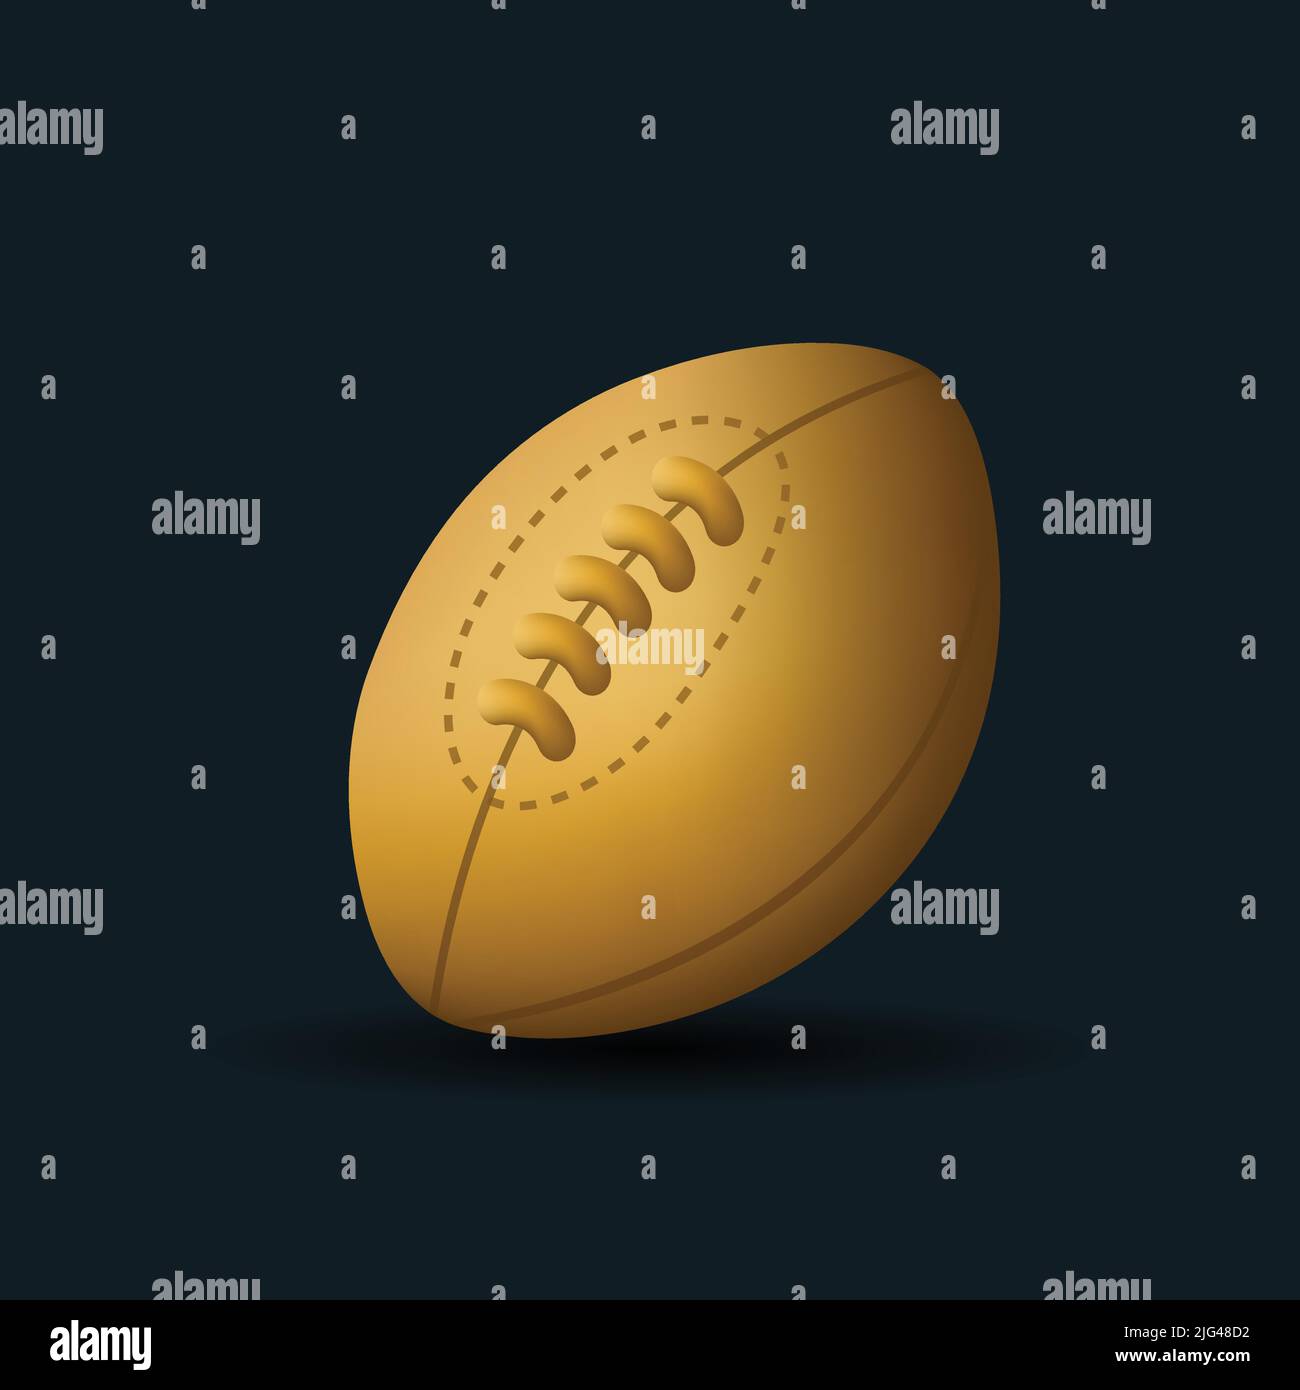 Golden American Football Ball vector Emoji illustration. 3d cartoon Style Ball isolated on background. Stock Vector